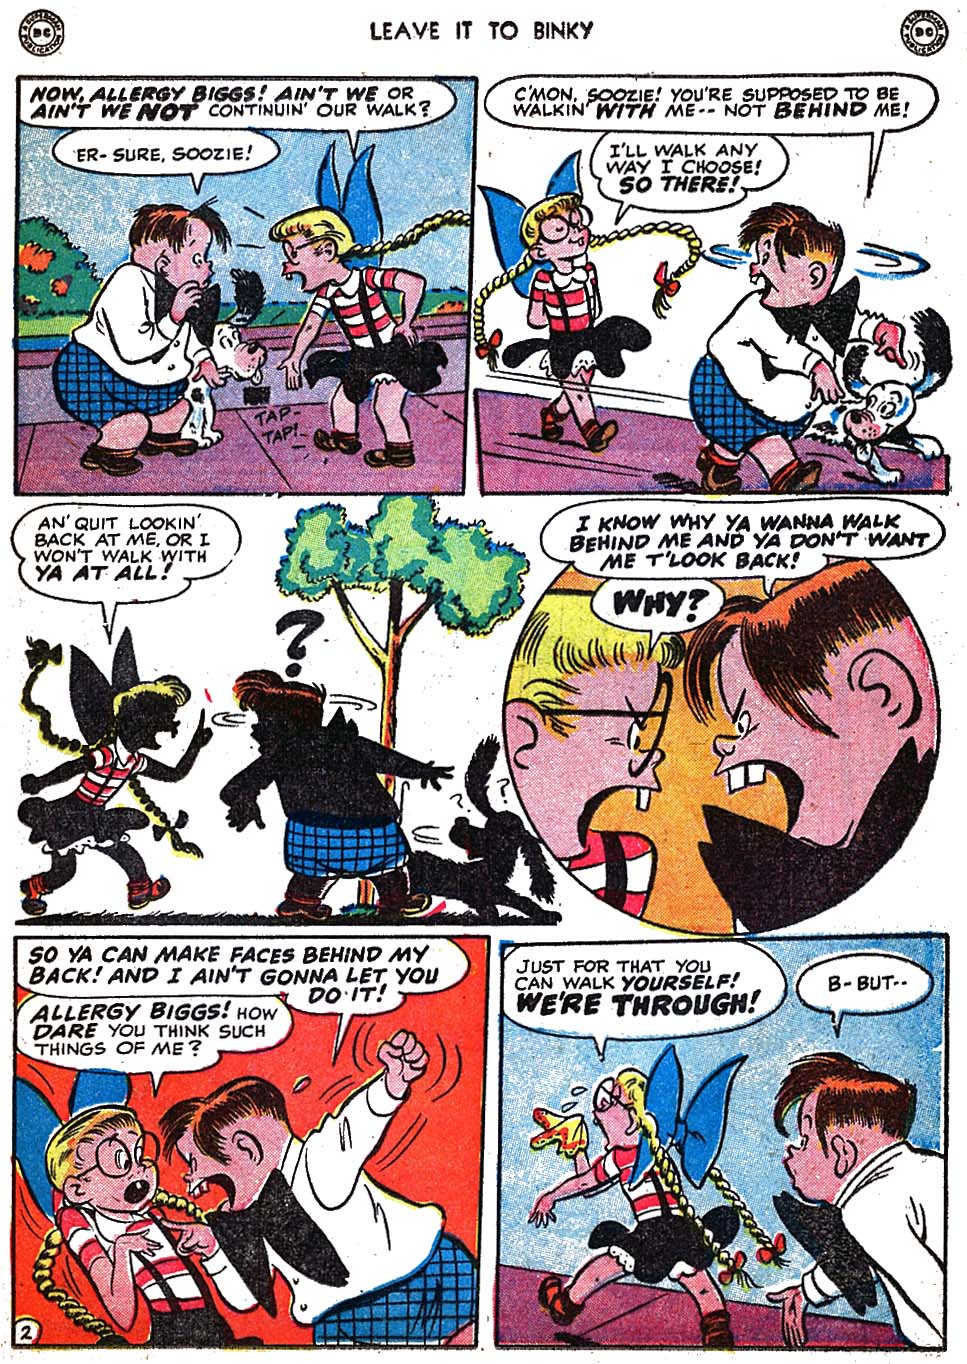 Read online Leave it to Binky comic -  Issue #5 - 37